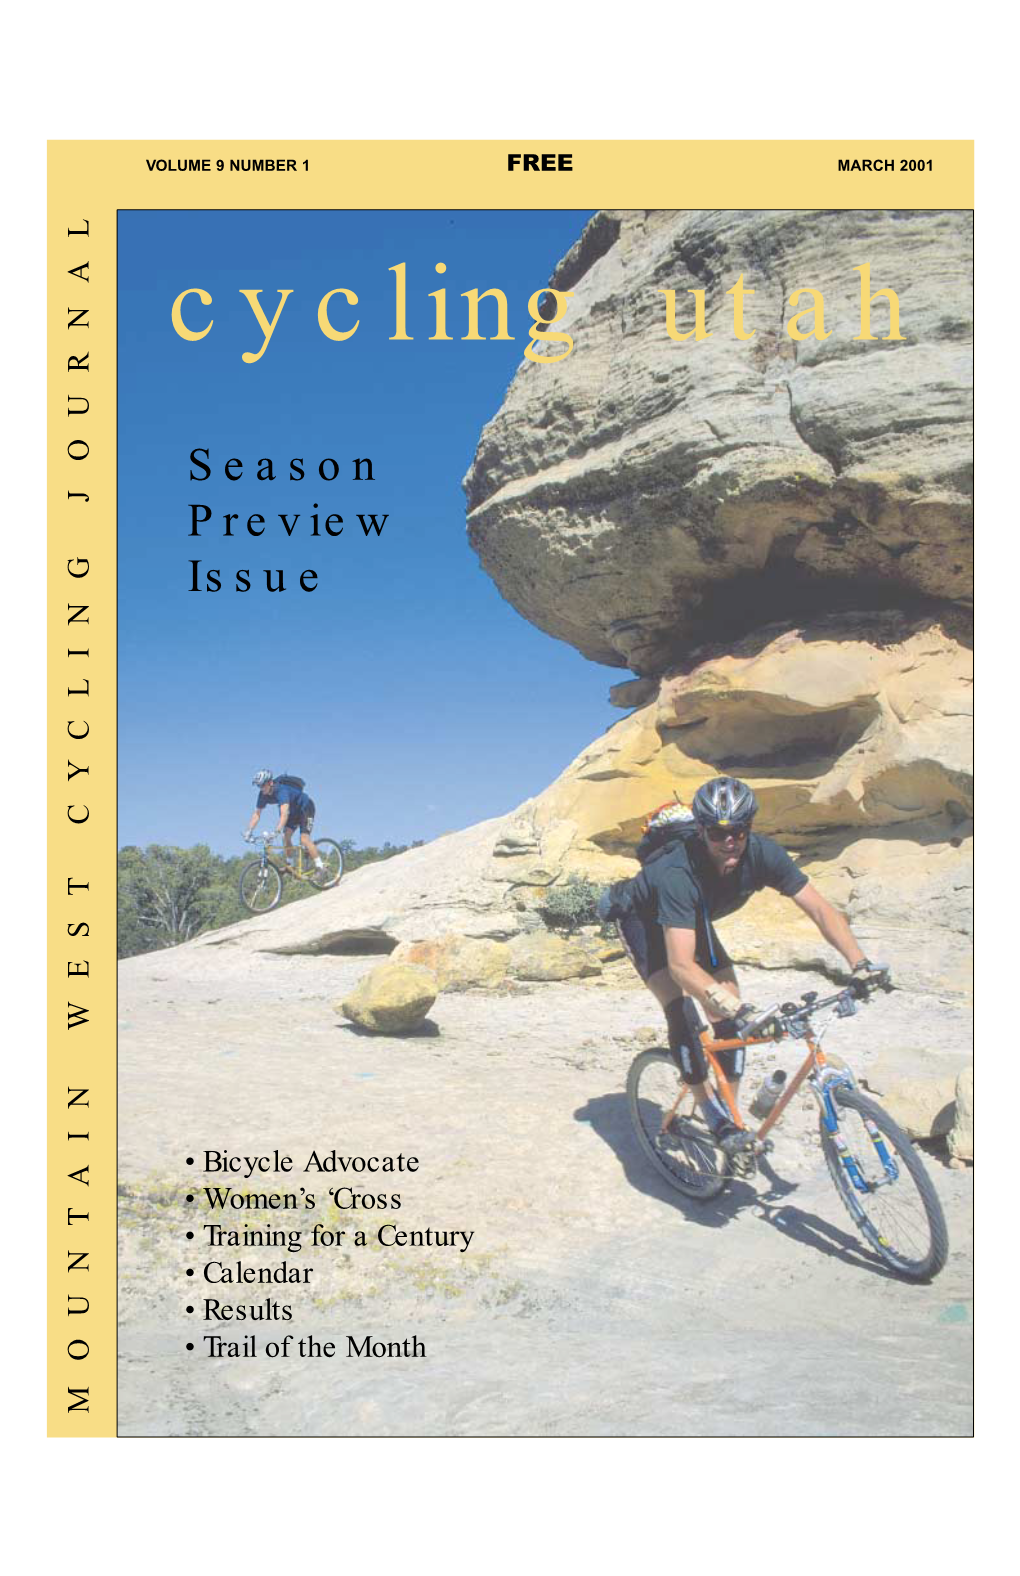 MARCH 2001 Cycling Utah